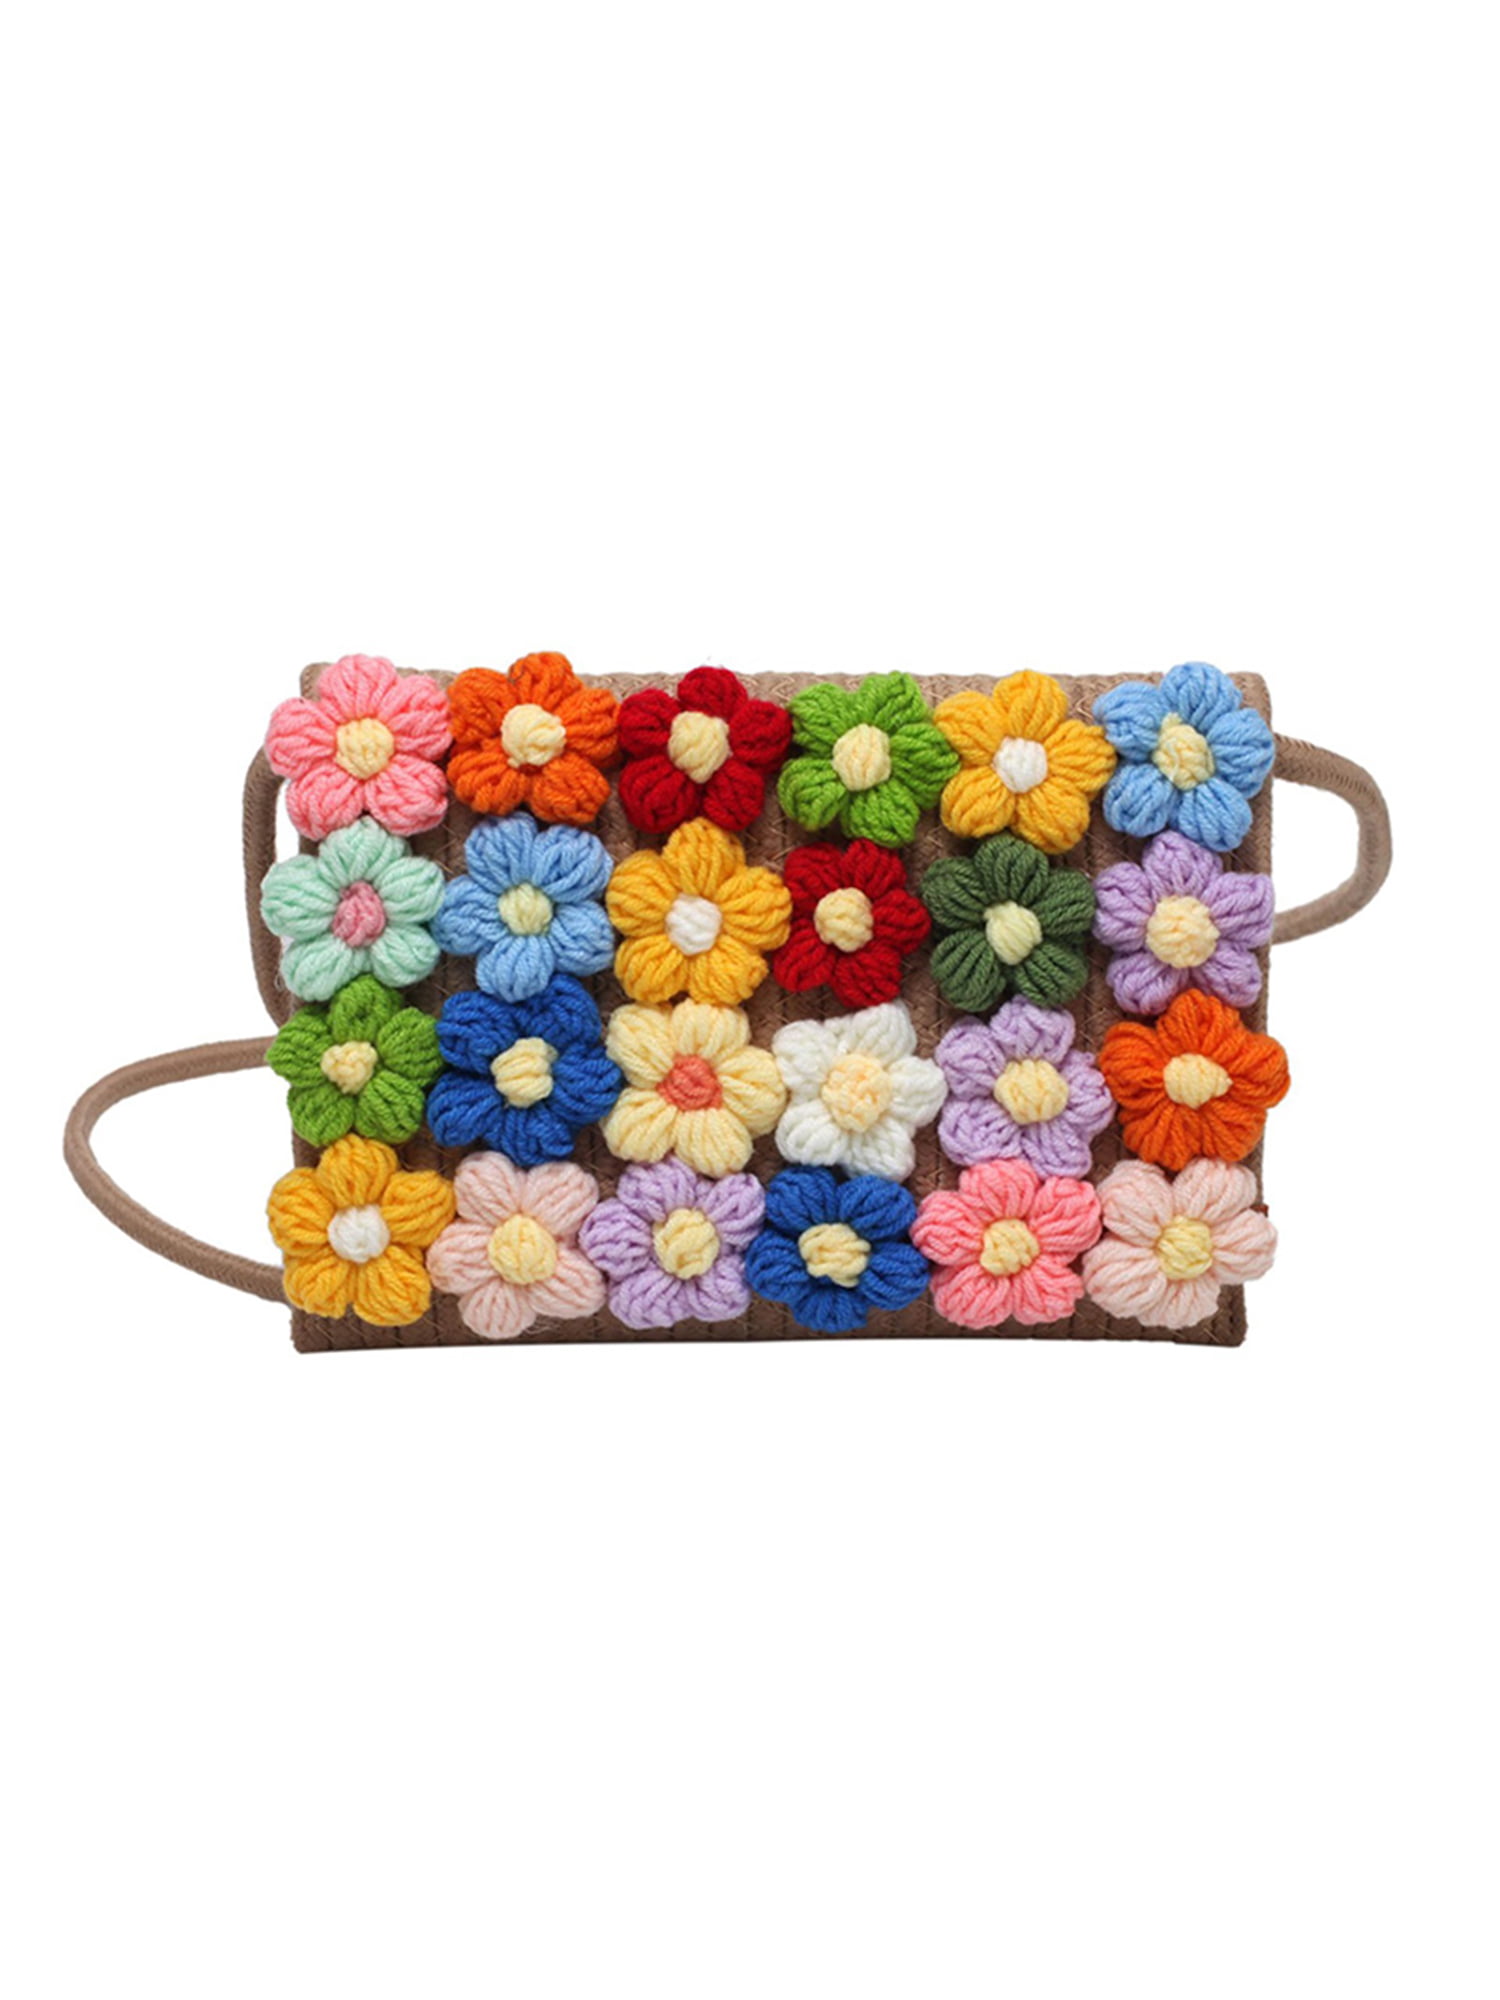 A Floral Crochet Bag - Sew Dainty